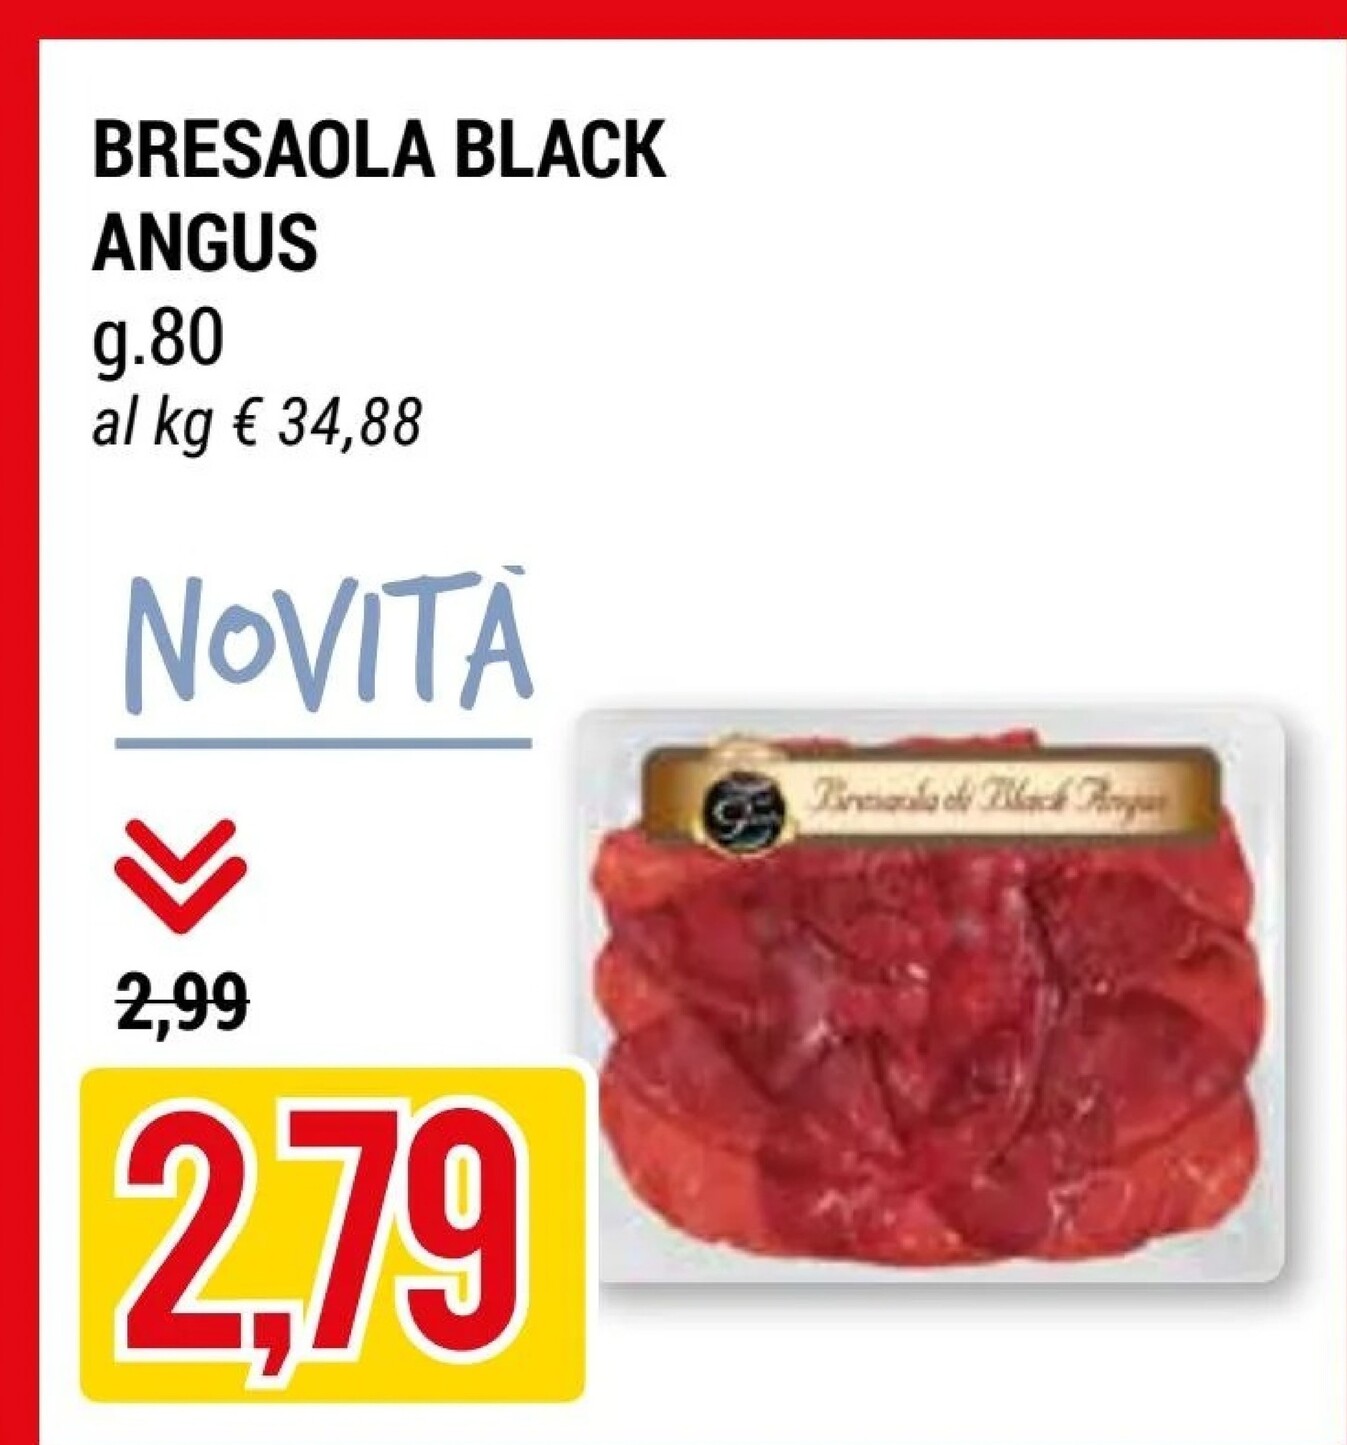 Offerta per Bresaola Black Angus a 2,79€ in Hardis